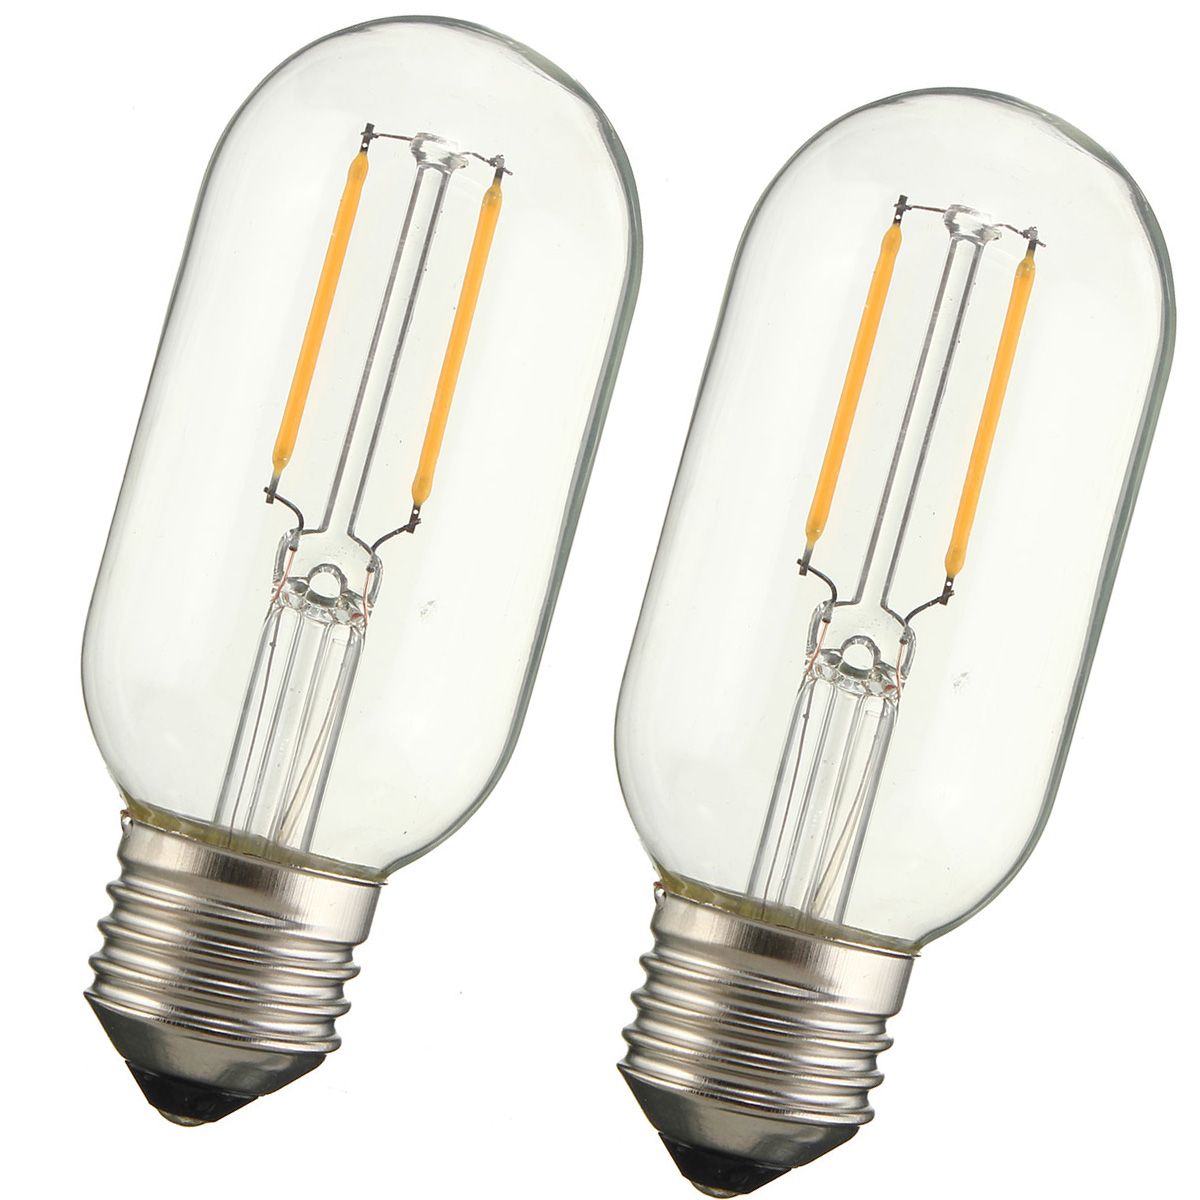 Dimmable-T45-E27-E26-2W-COB-Retro-Vintage-Edison-Warm-White-120Lm-Light-Lamp-Bulb-AC110V-AC220V-1072532